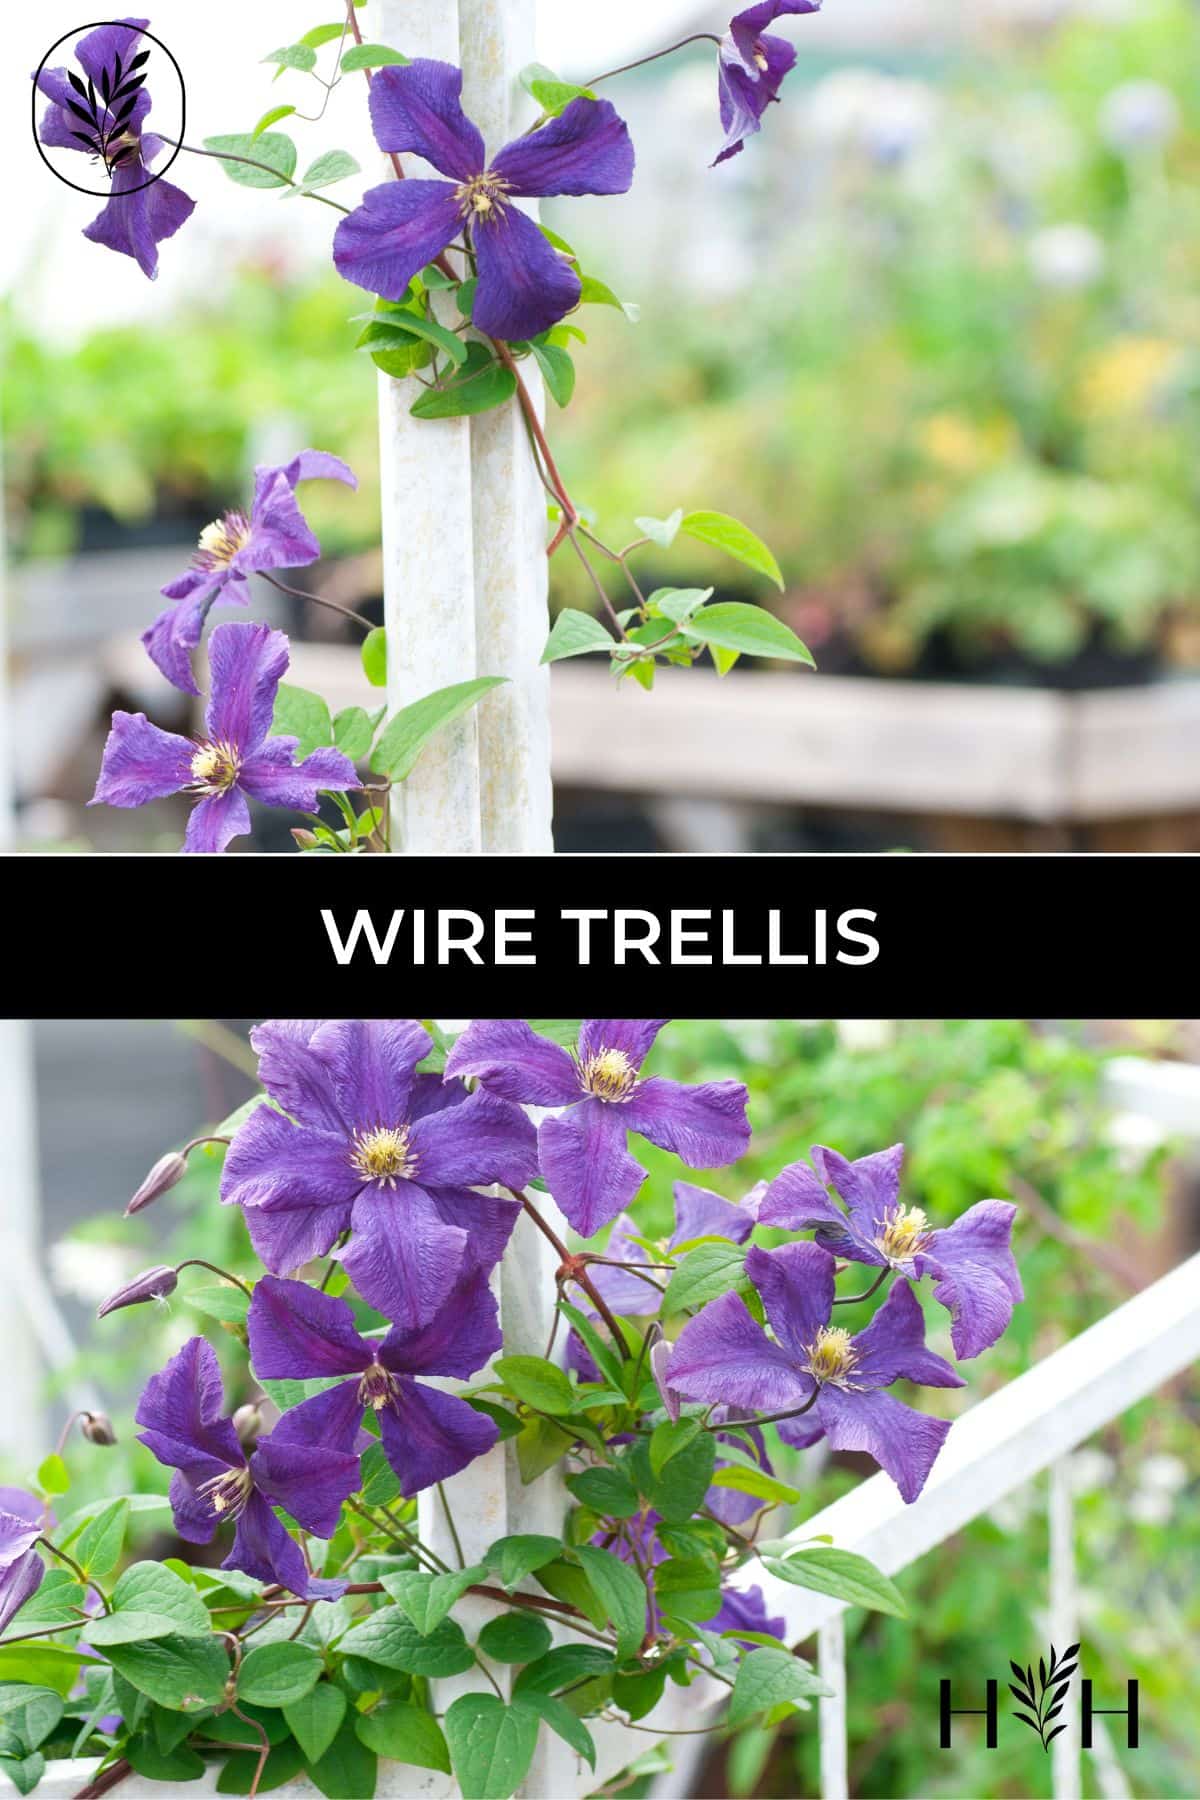 Wire trellis via @home4theharvest